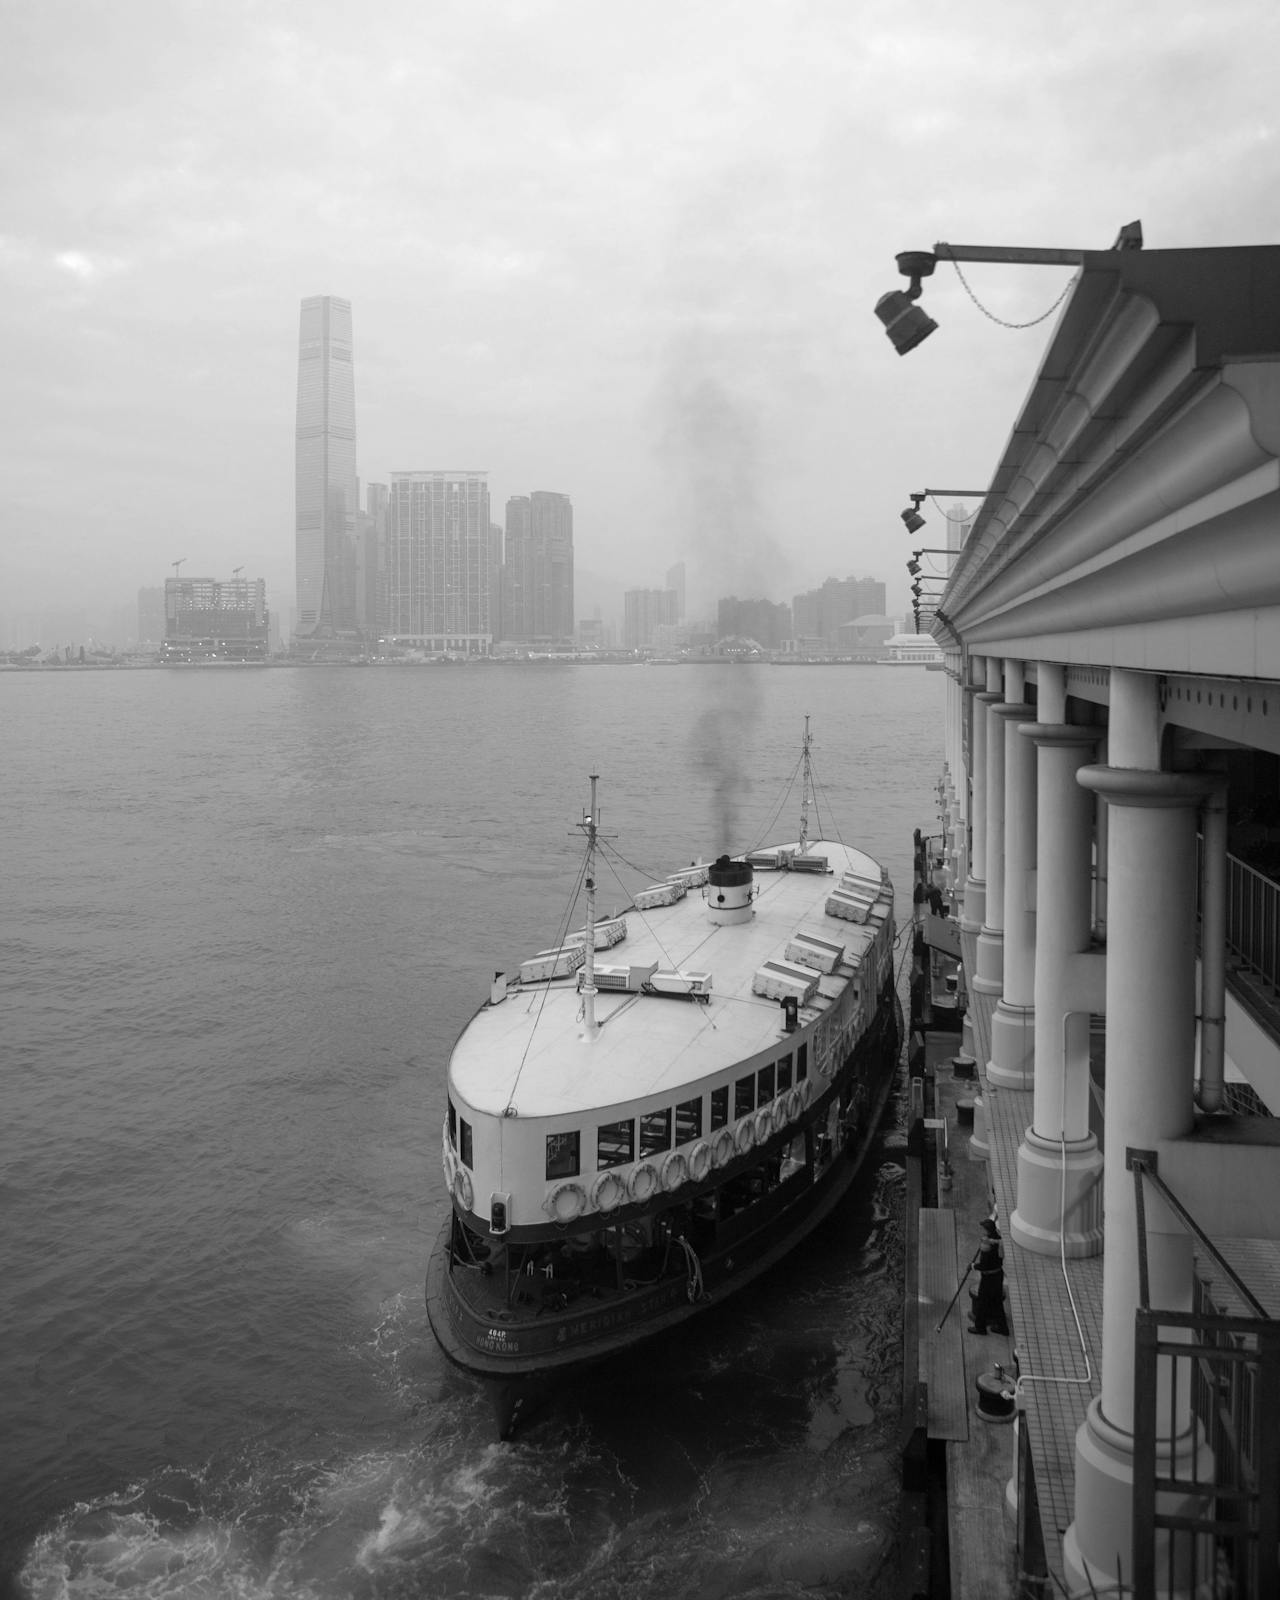 Ferry docked at the Hong Kong Macau Ferry Terminal